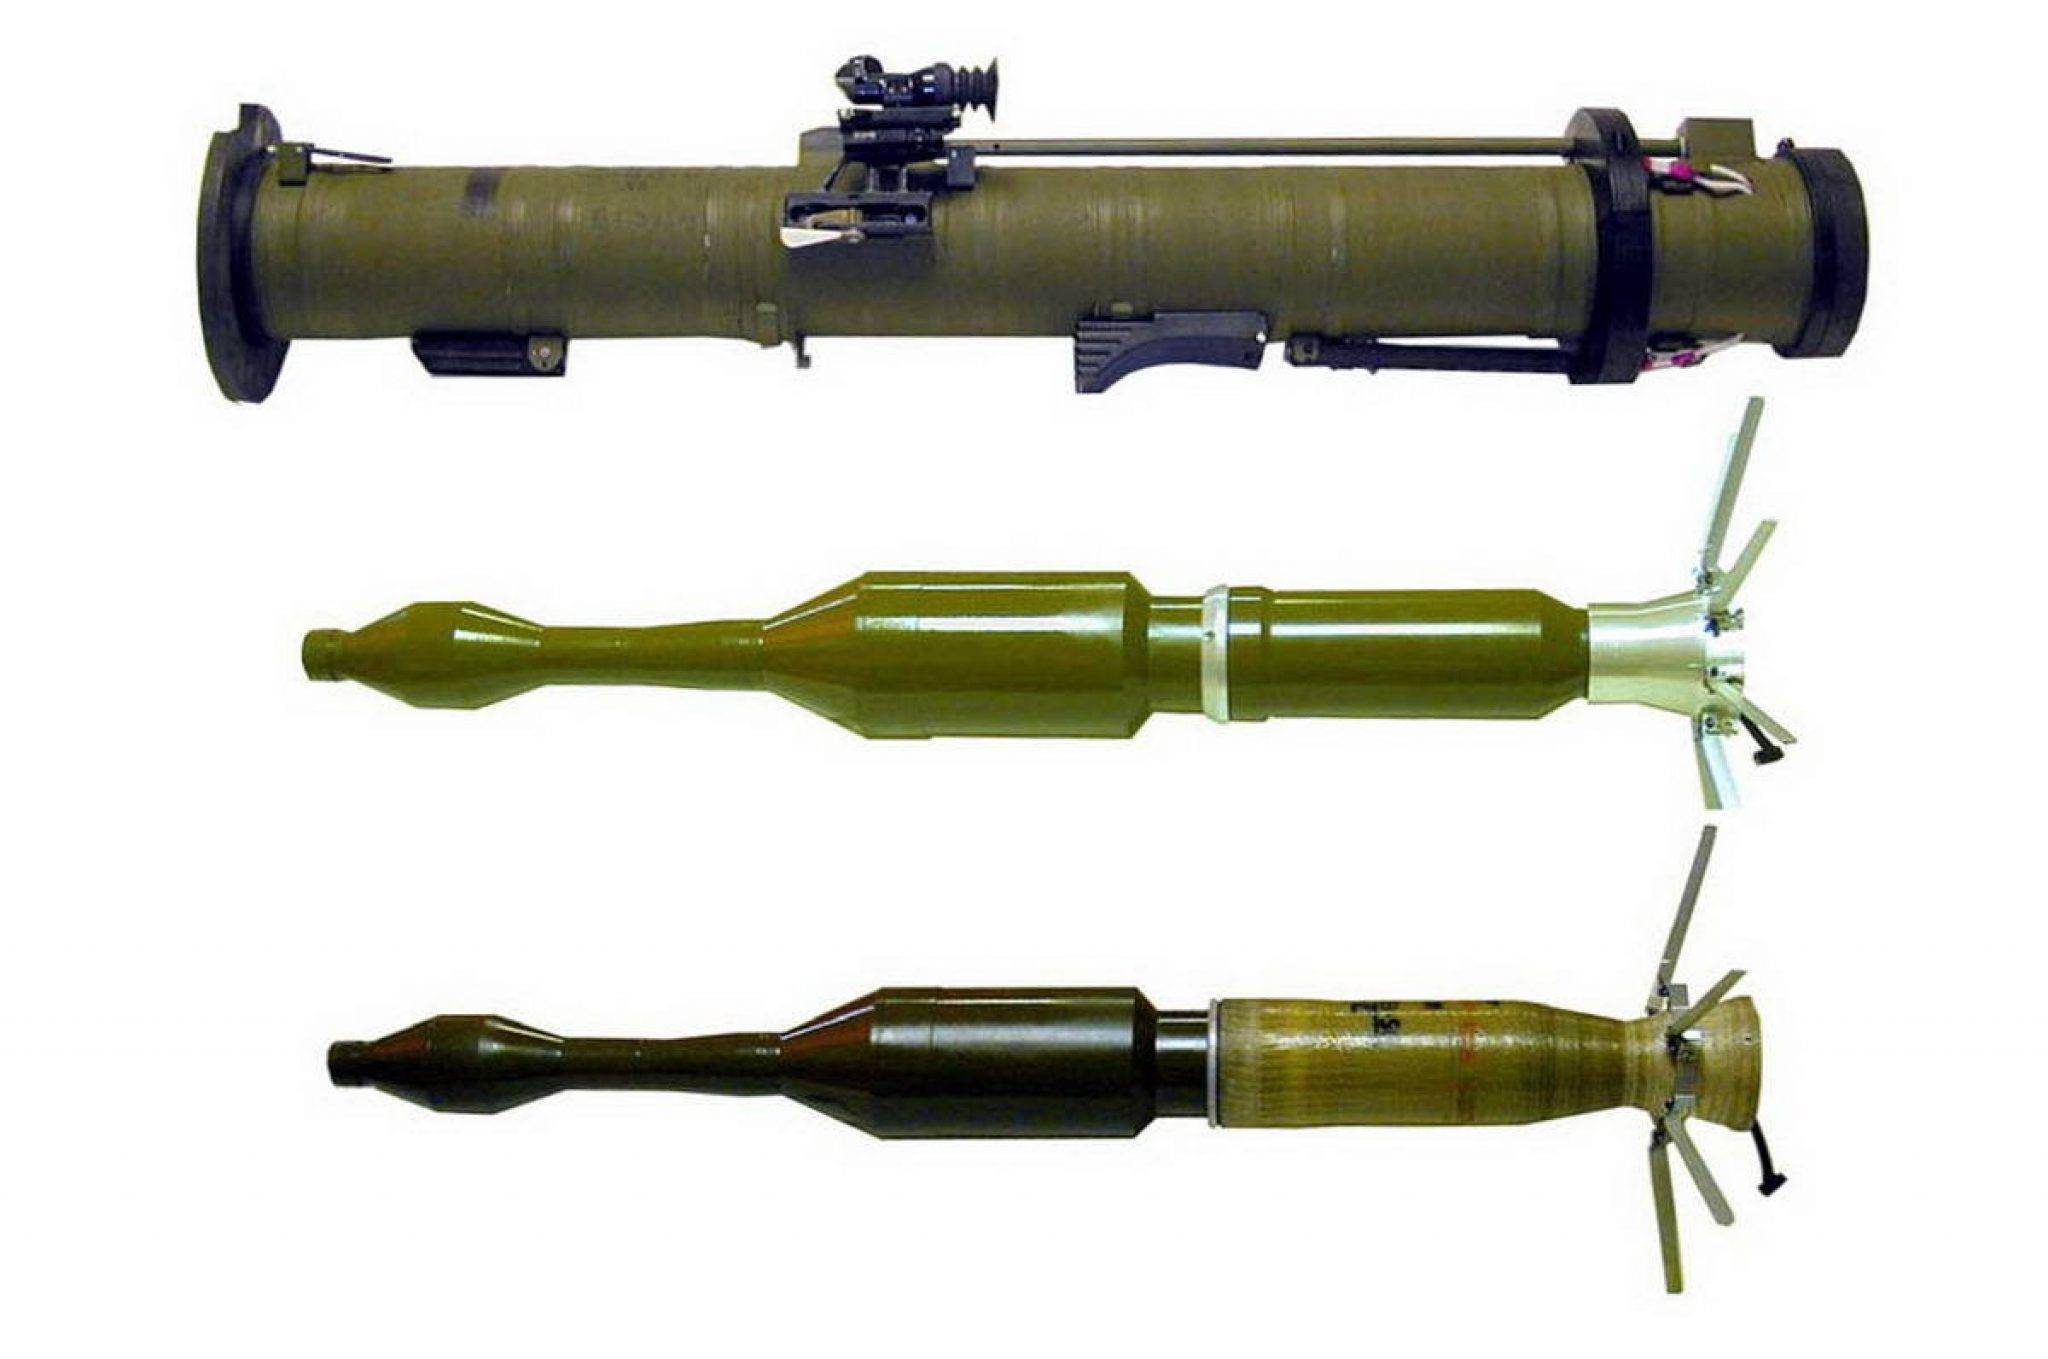 Рпг-22 «нетто» — реактивная противотанковая граната